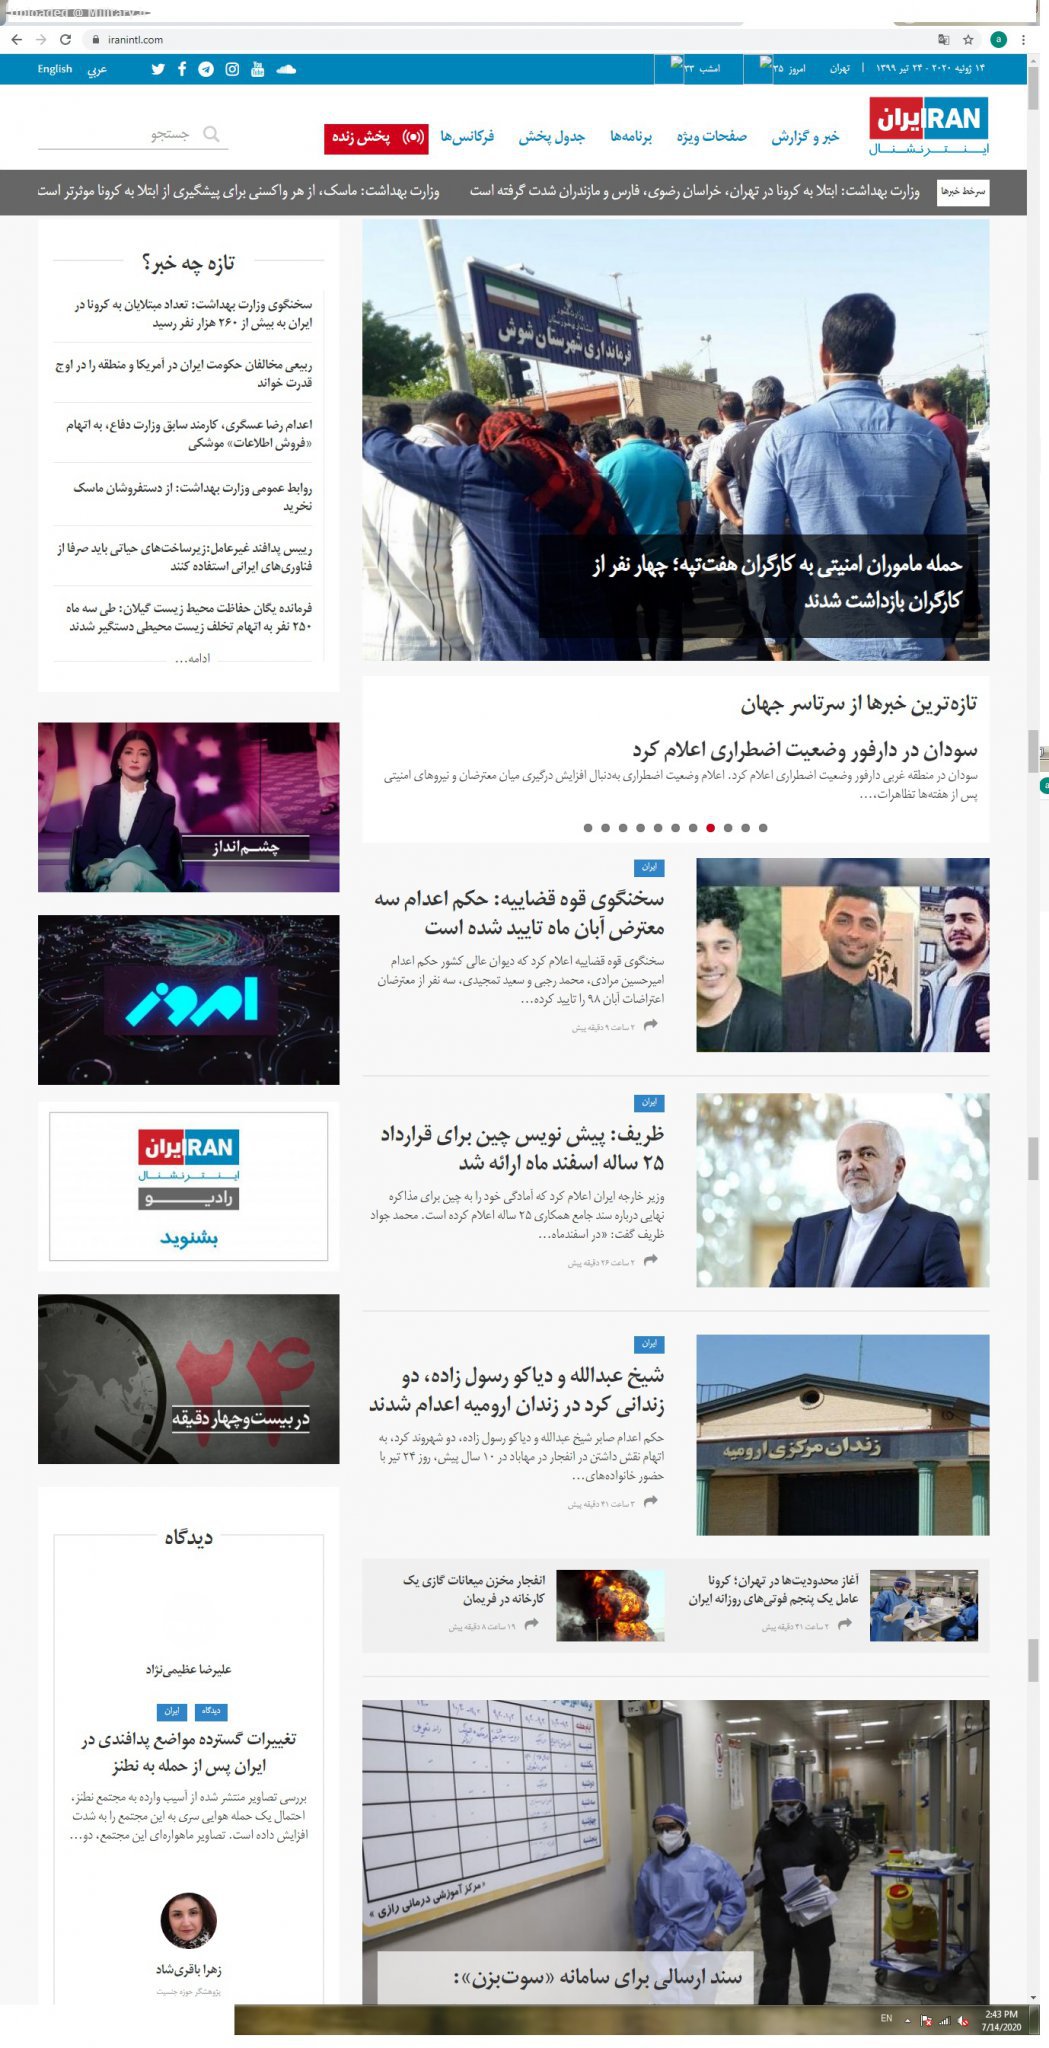 news_iran_international.jpg